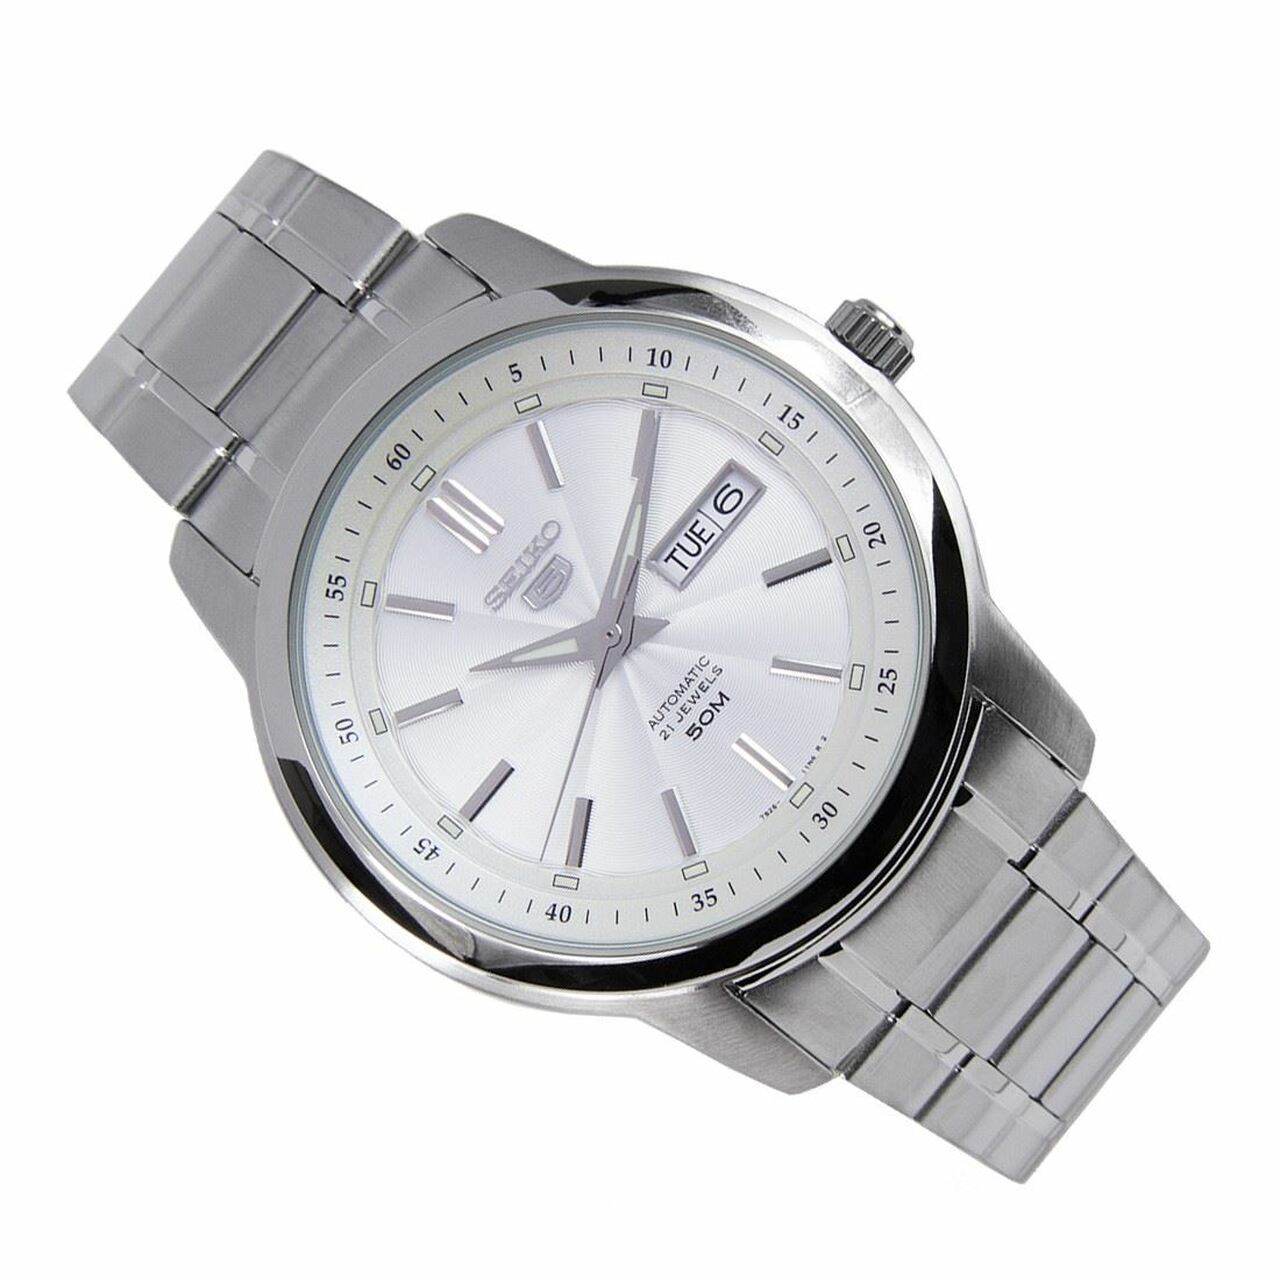 Reloj Seiko Seiko 5 snkm83 K1 de los hombres Color Blanco